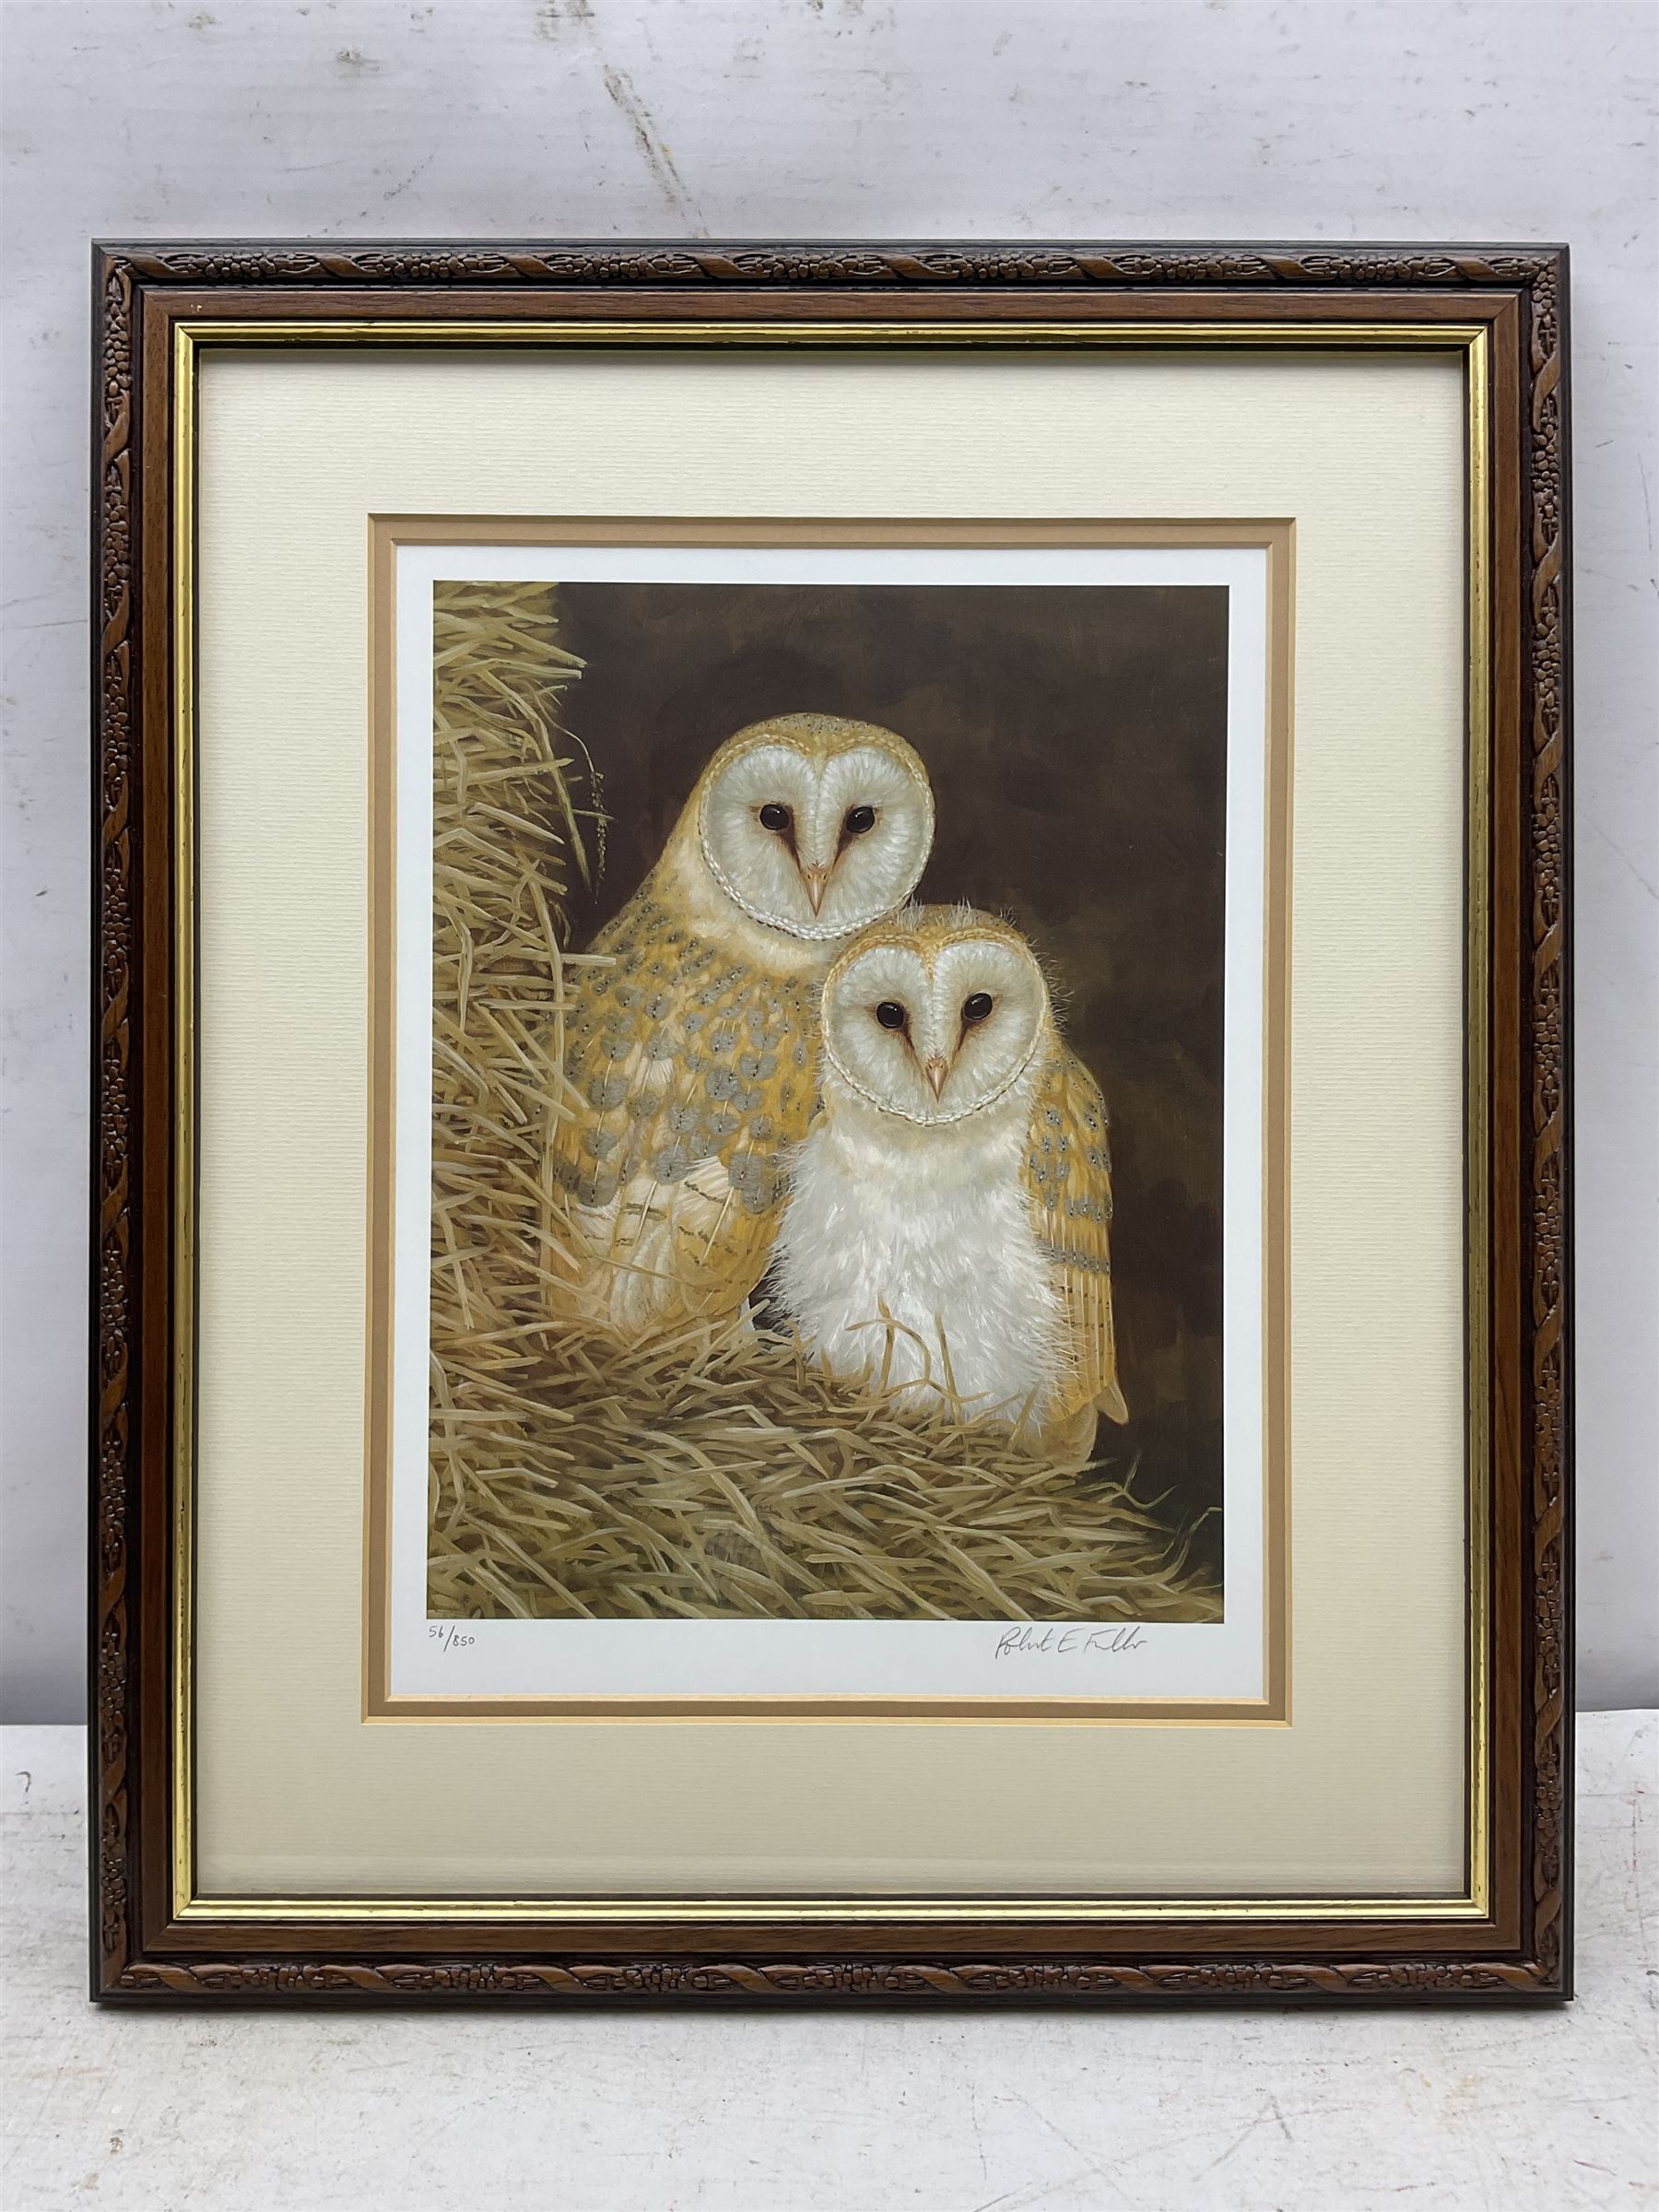 Robert E Fuller (British 1972-): 'Owls Snuggled Up' - Image 2 of 2